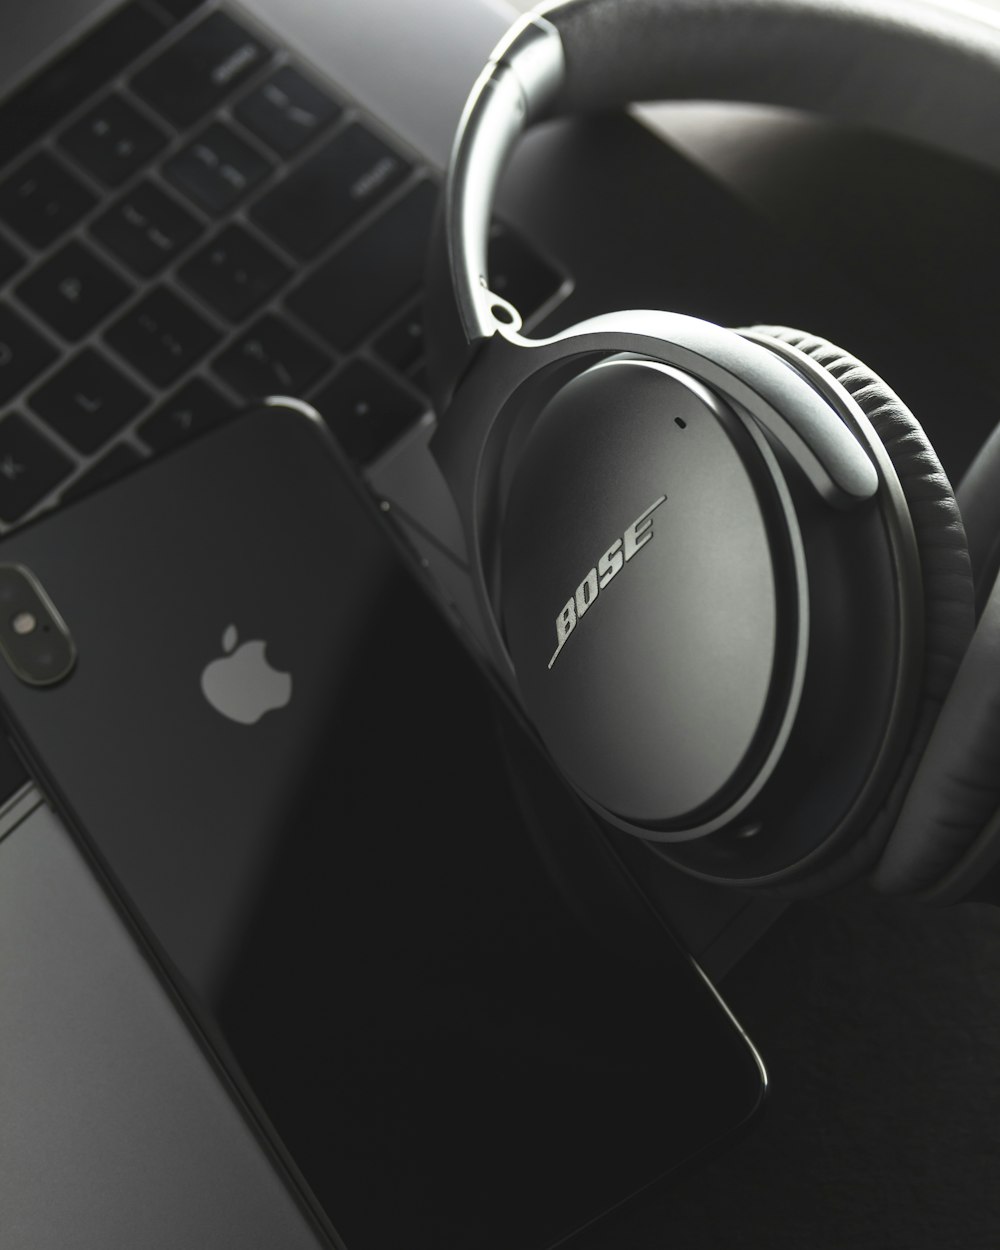 Gray and black Bose headset and black iPhone X photo – Free Grey Image on  Unsplash